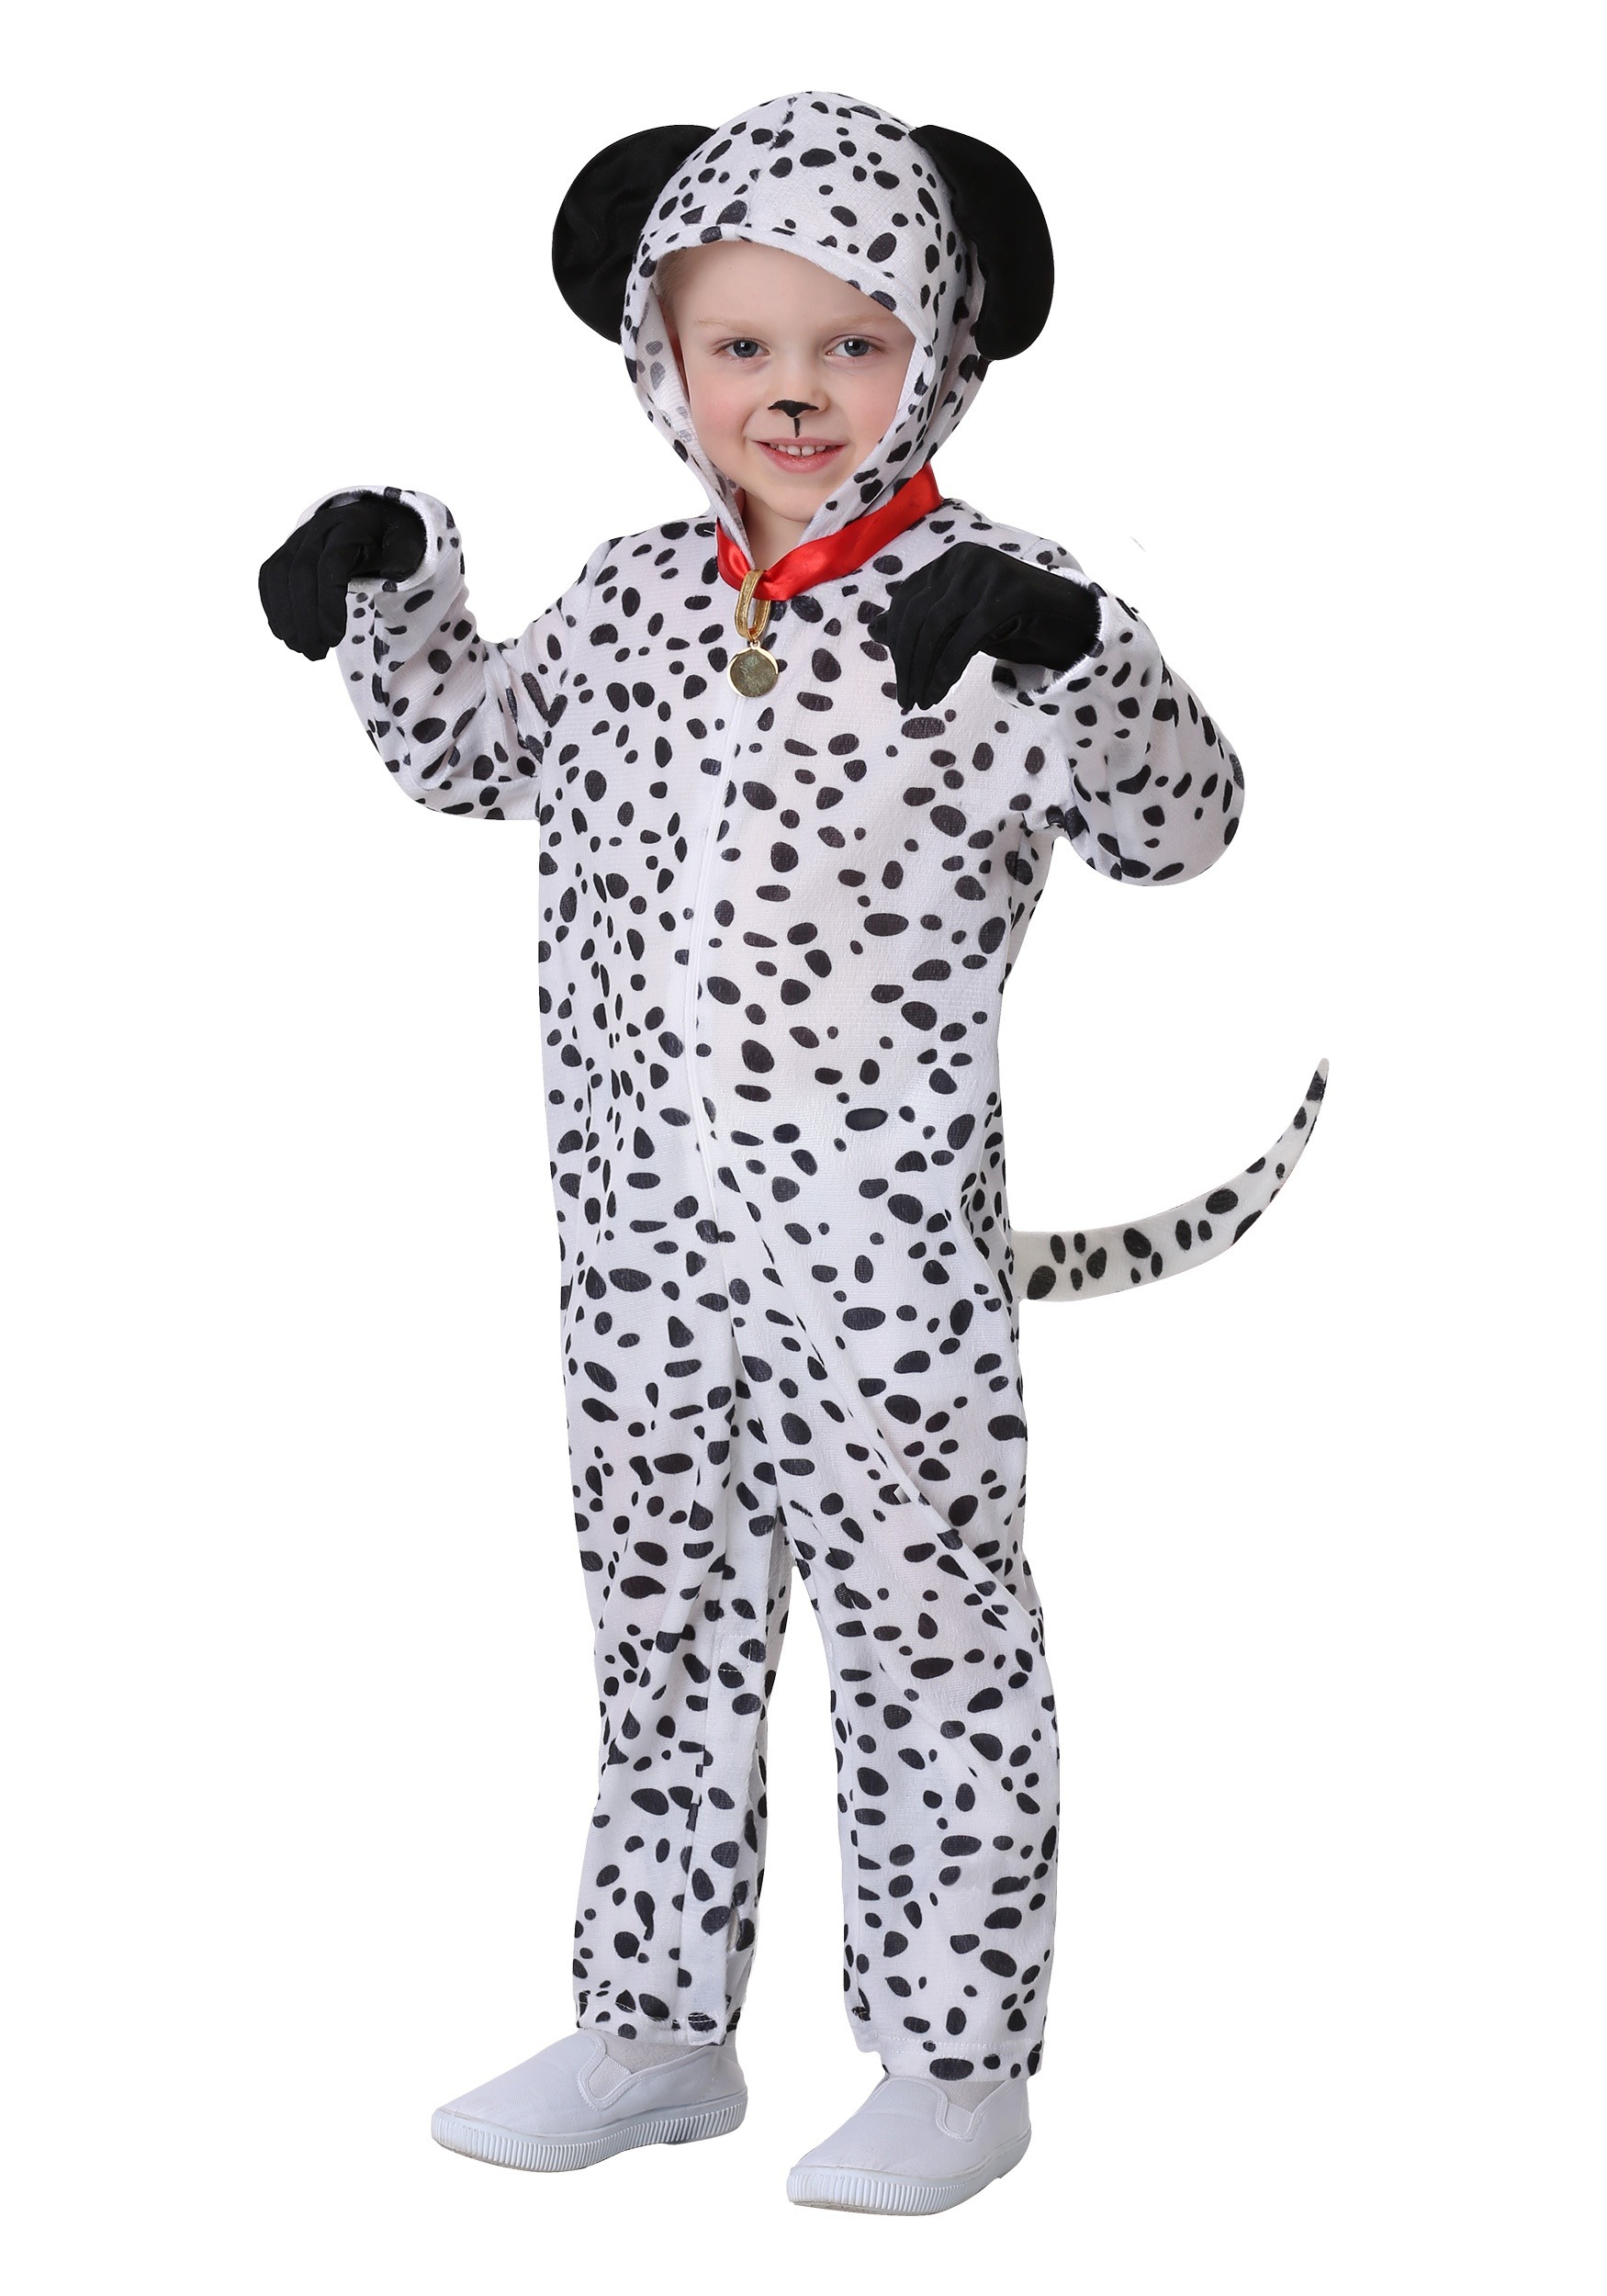 Delightful Dalmatian Costume for a Toddler